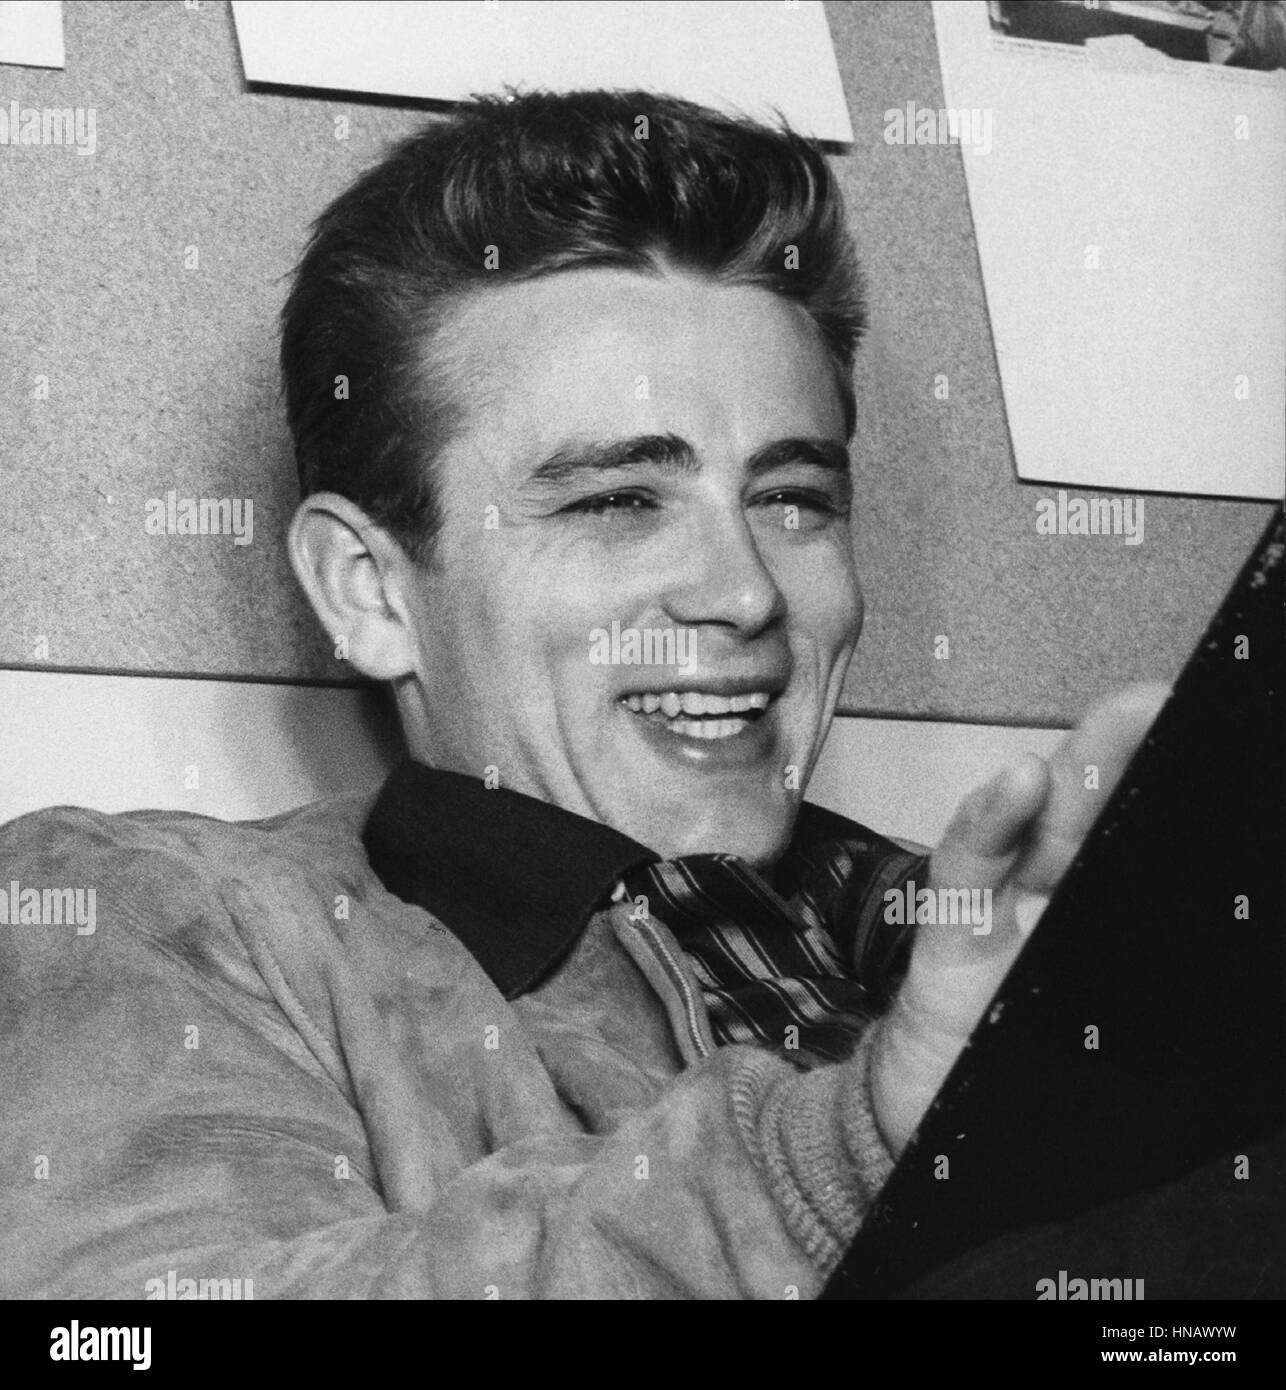 James Dean Actor 1955 Stock Photo Alamy